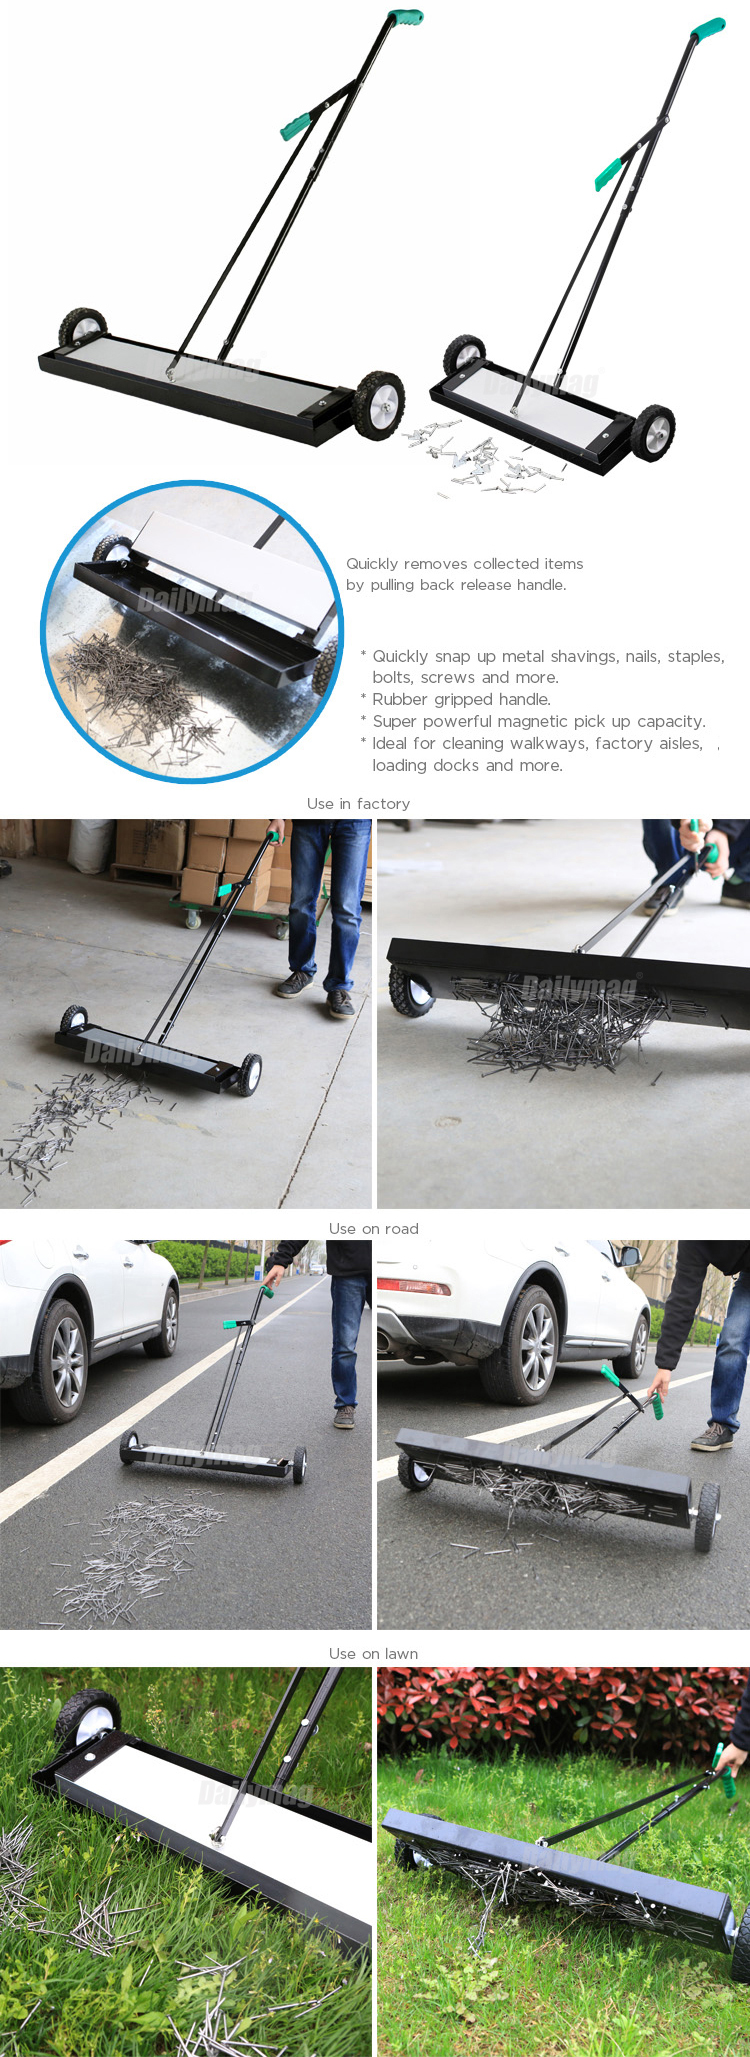 Magnetic Sweeper16" Metal Pick Up Push Broom Mini Floor Cleaner Pull Roller